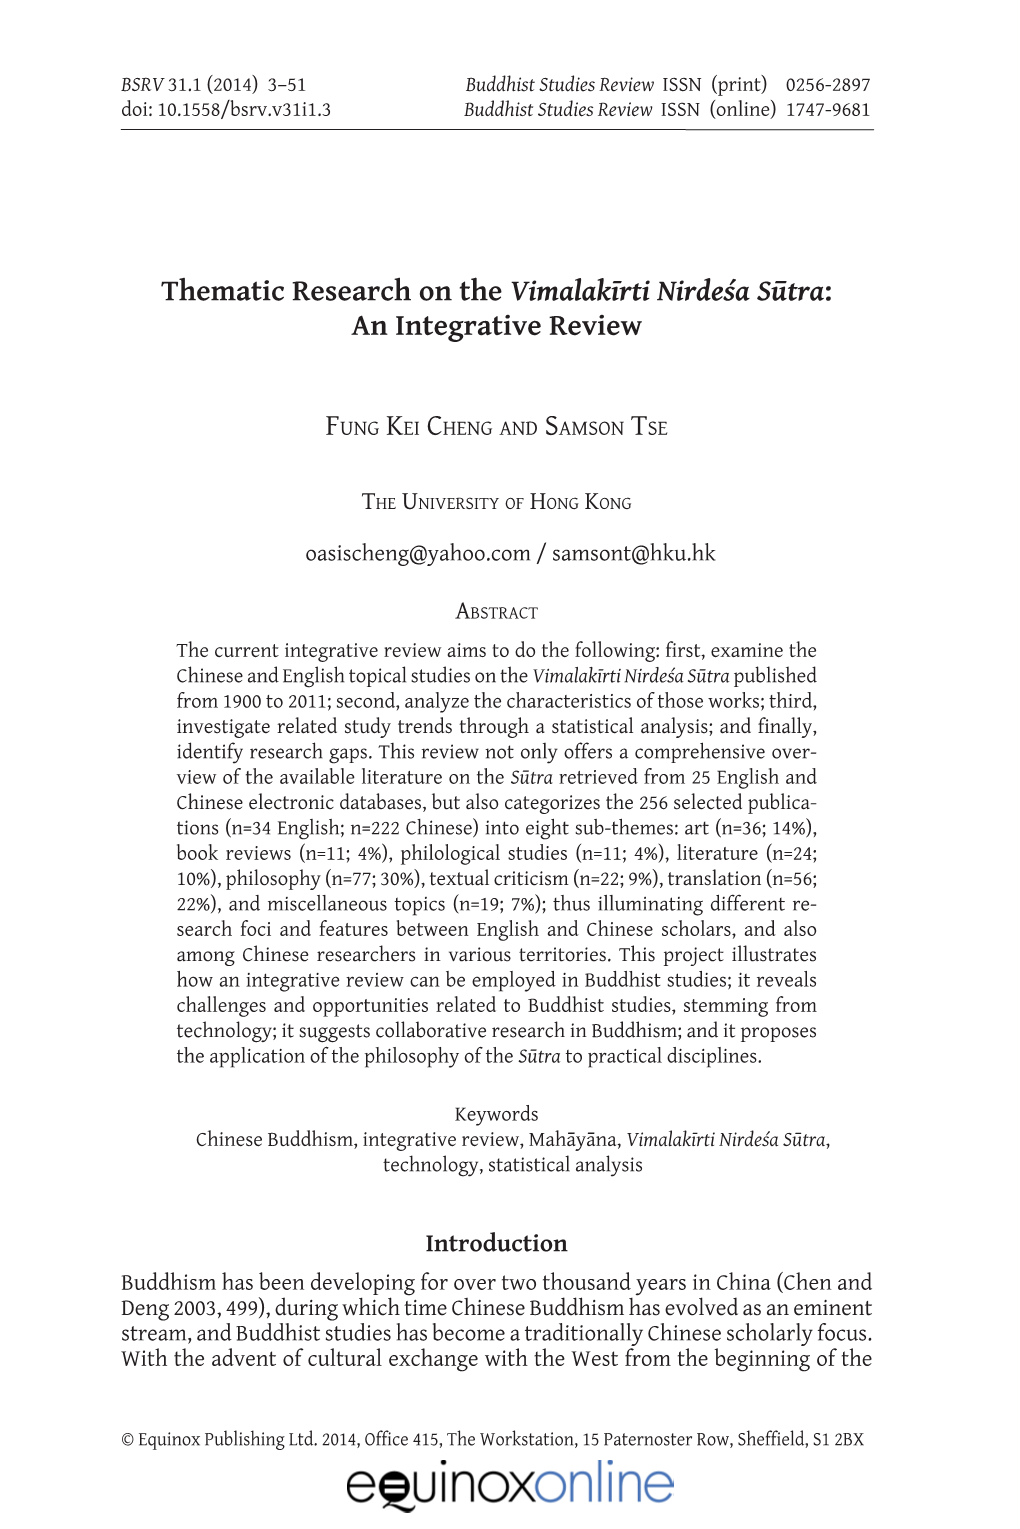 Thematic Research on the Vimalakīrti Nirdeśa Sūtra: an Integrative Review